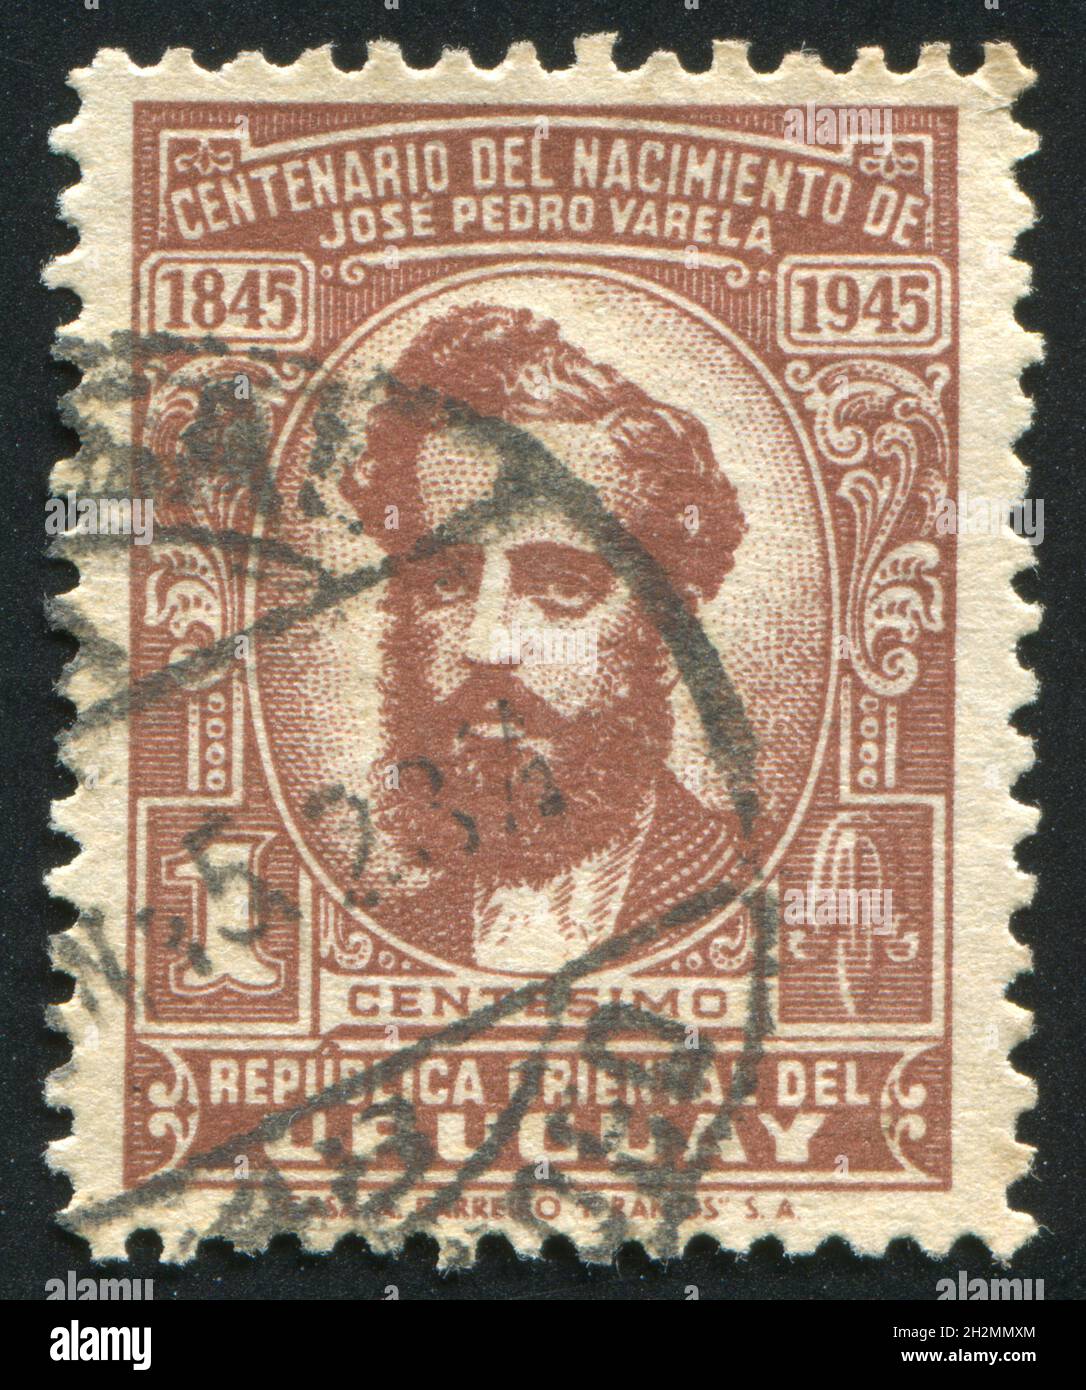 URUGUAY - CIRCA 1944: stamp printed by Uruguay, shows Jose Pedro Varela, circa 1944 Stock Photo